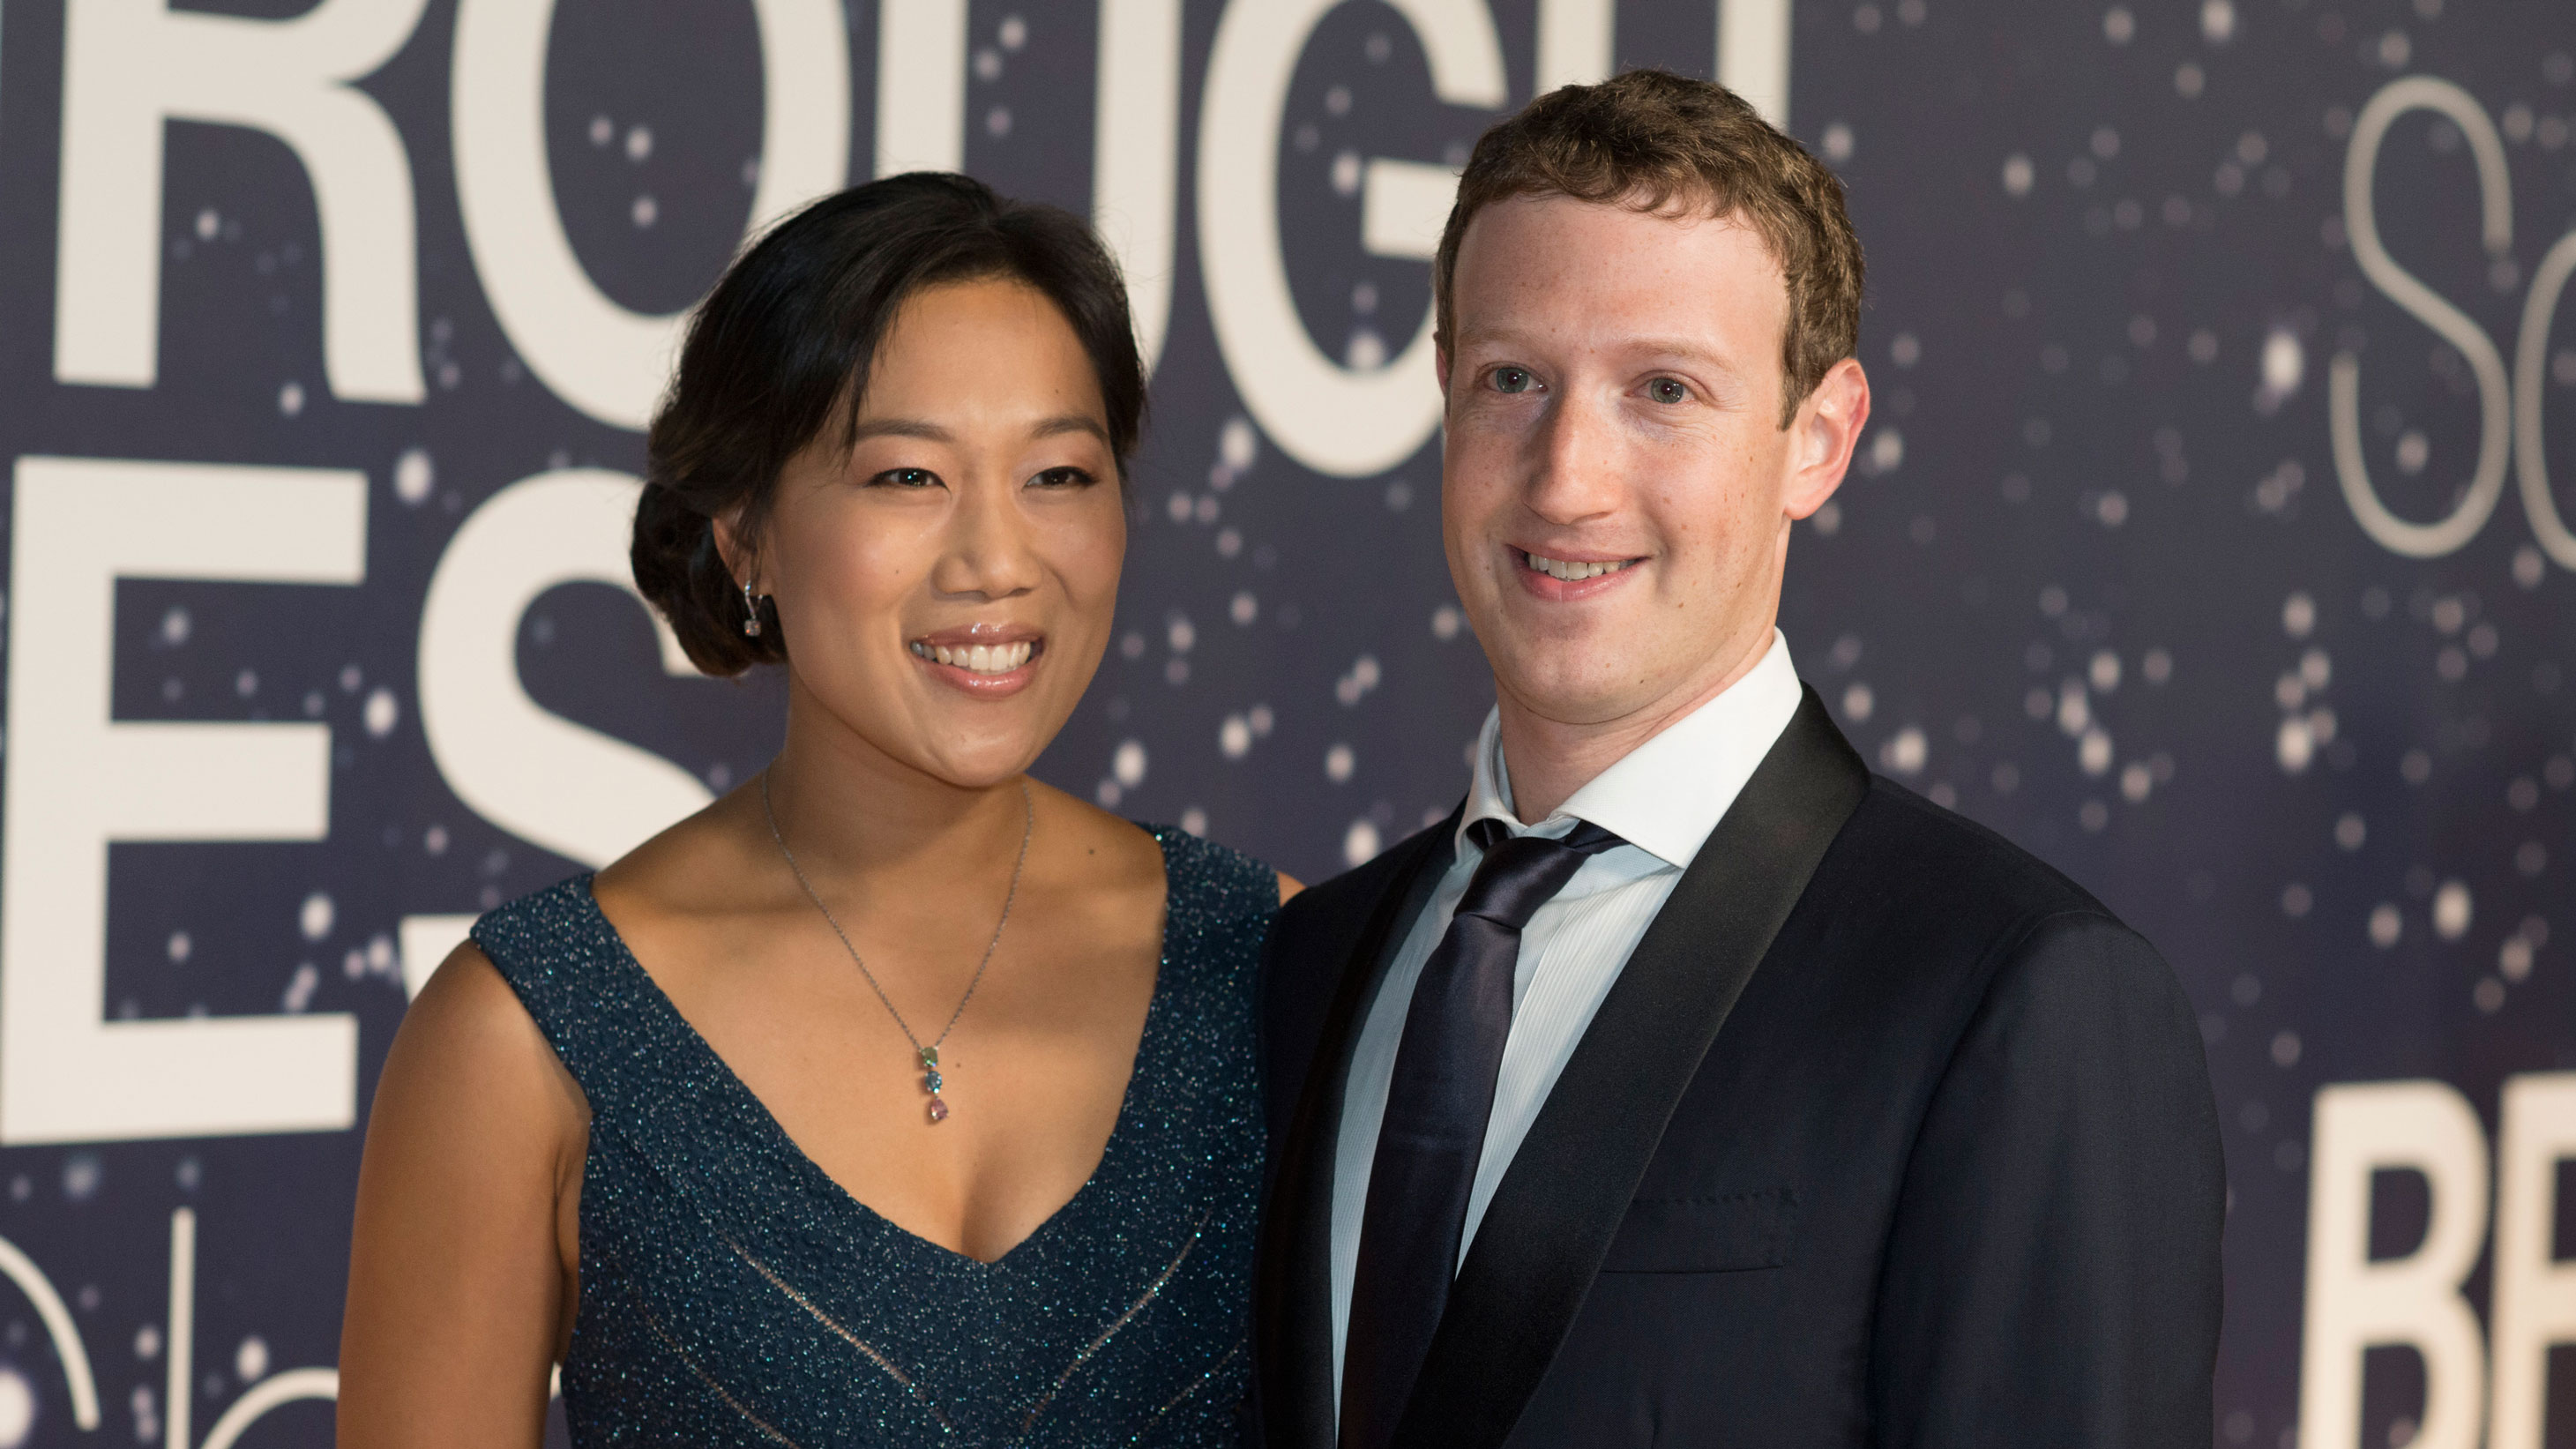 Zuckerberg’s CZI donates to struggling towns near Facebook